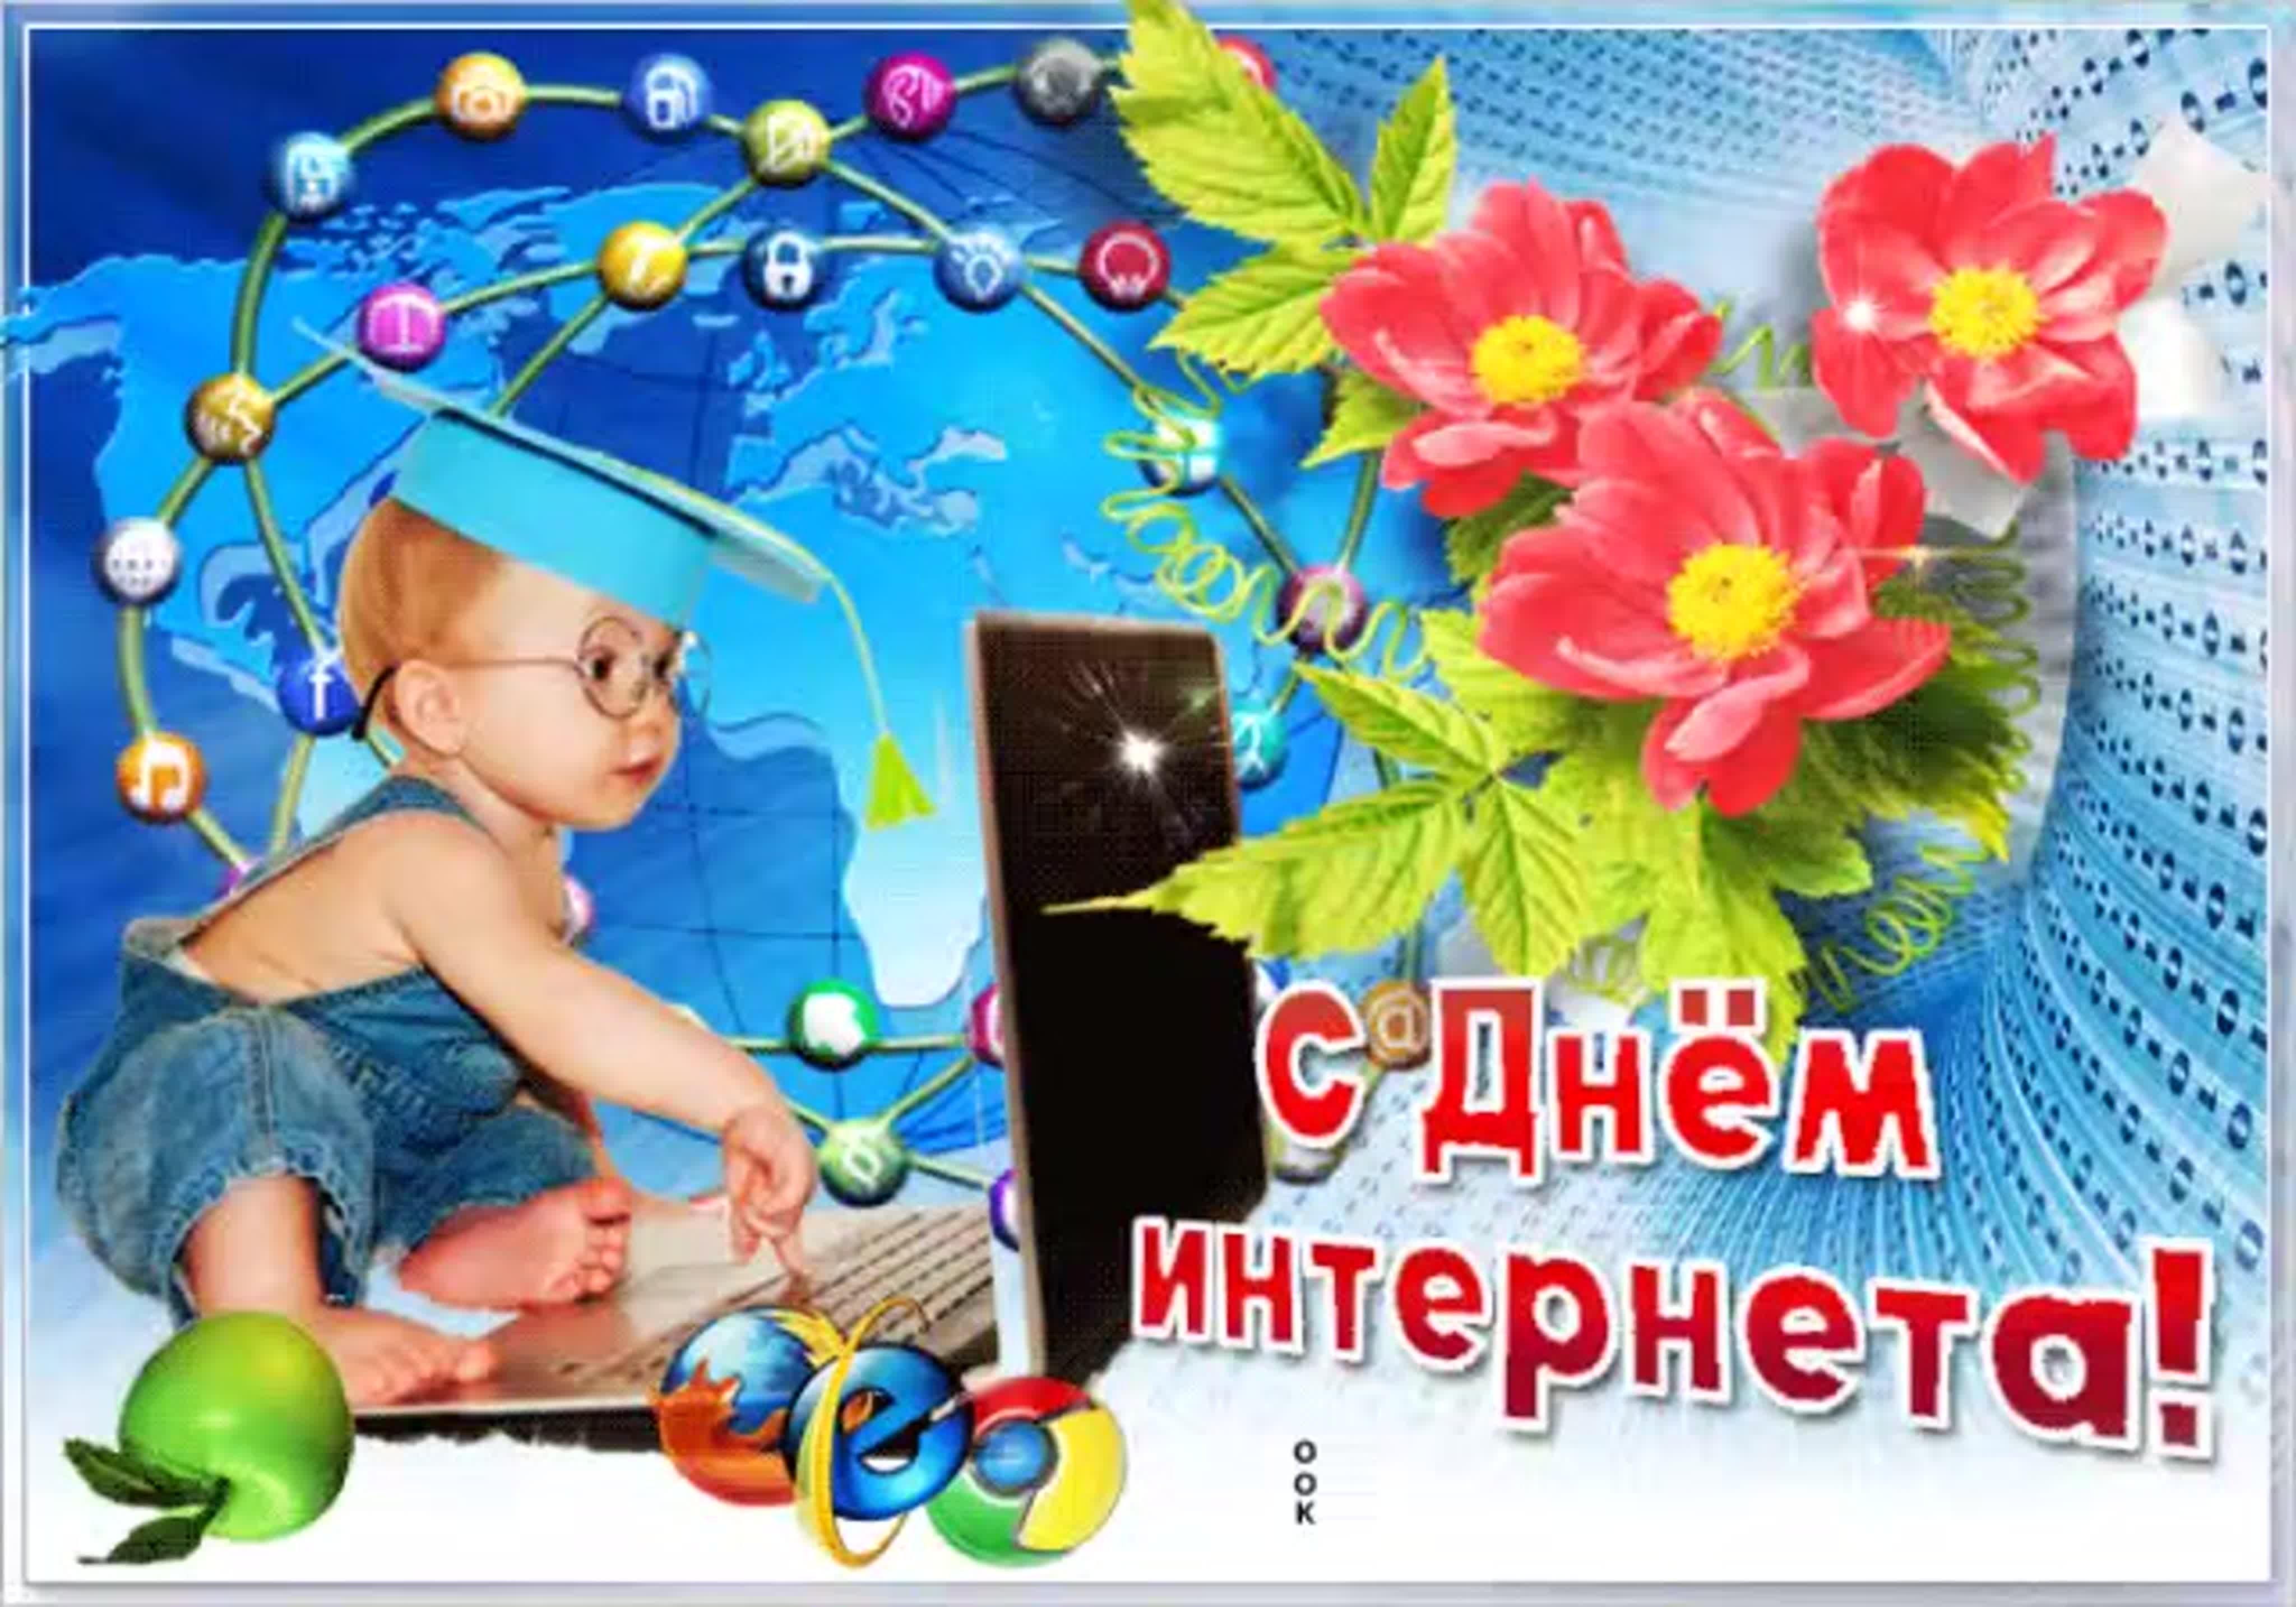 4 апреля день интернета. Международный день интернета. День интернета в России. Открытка с днем интернета. Поздравление с днем интернета.